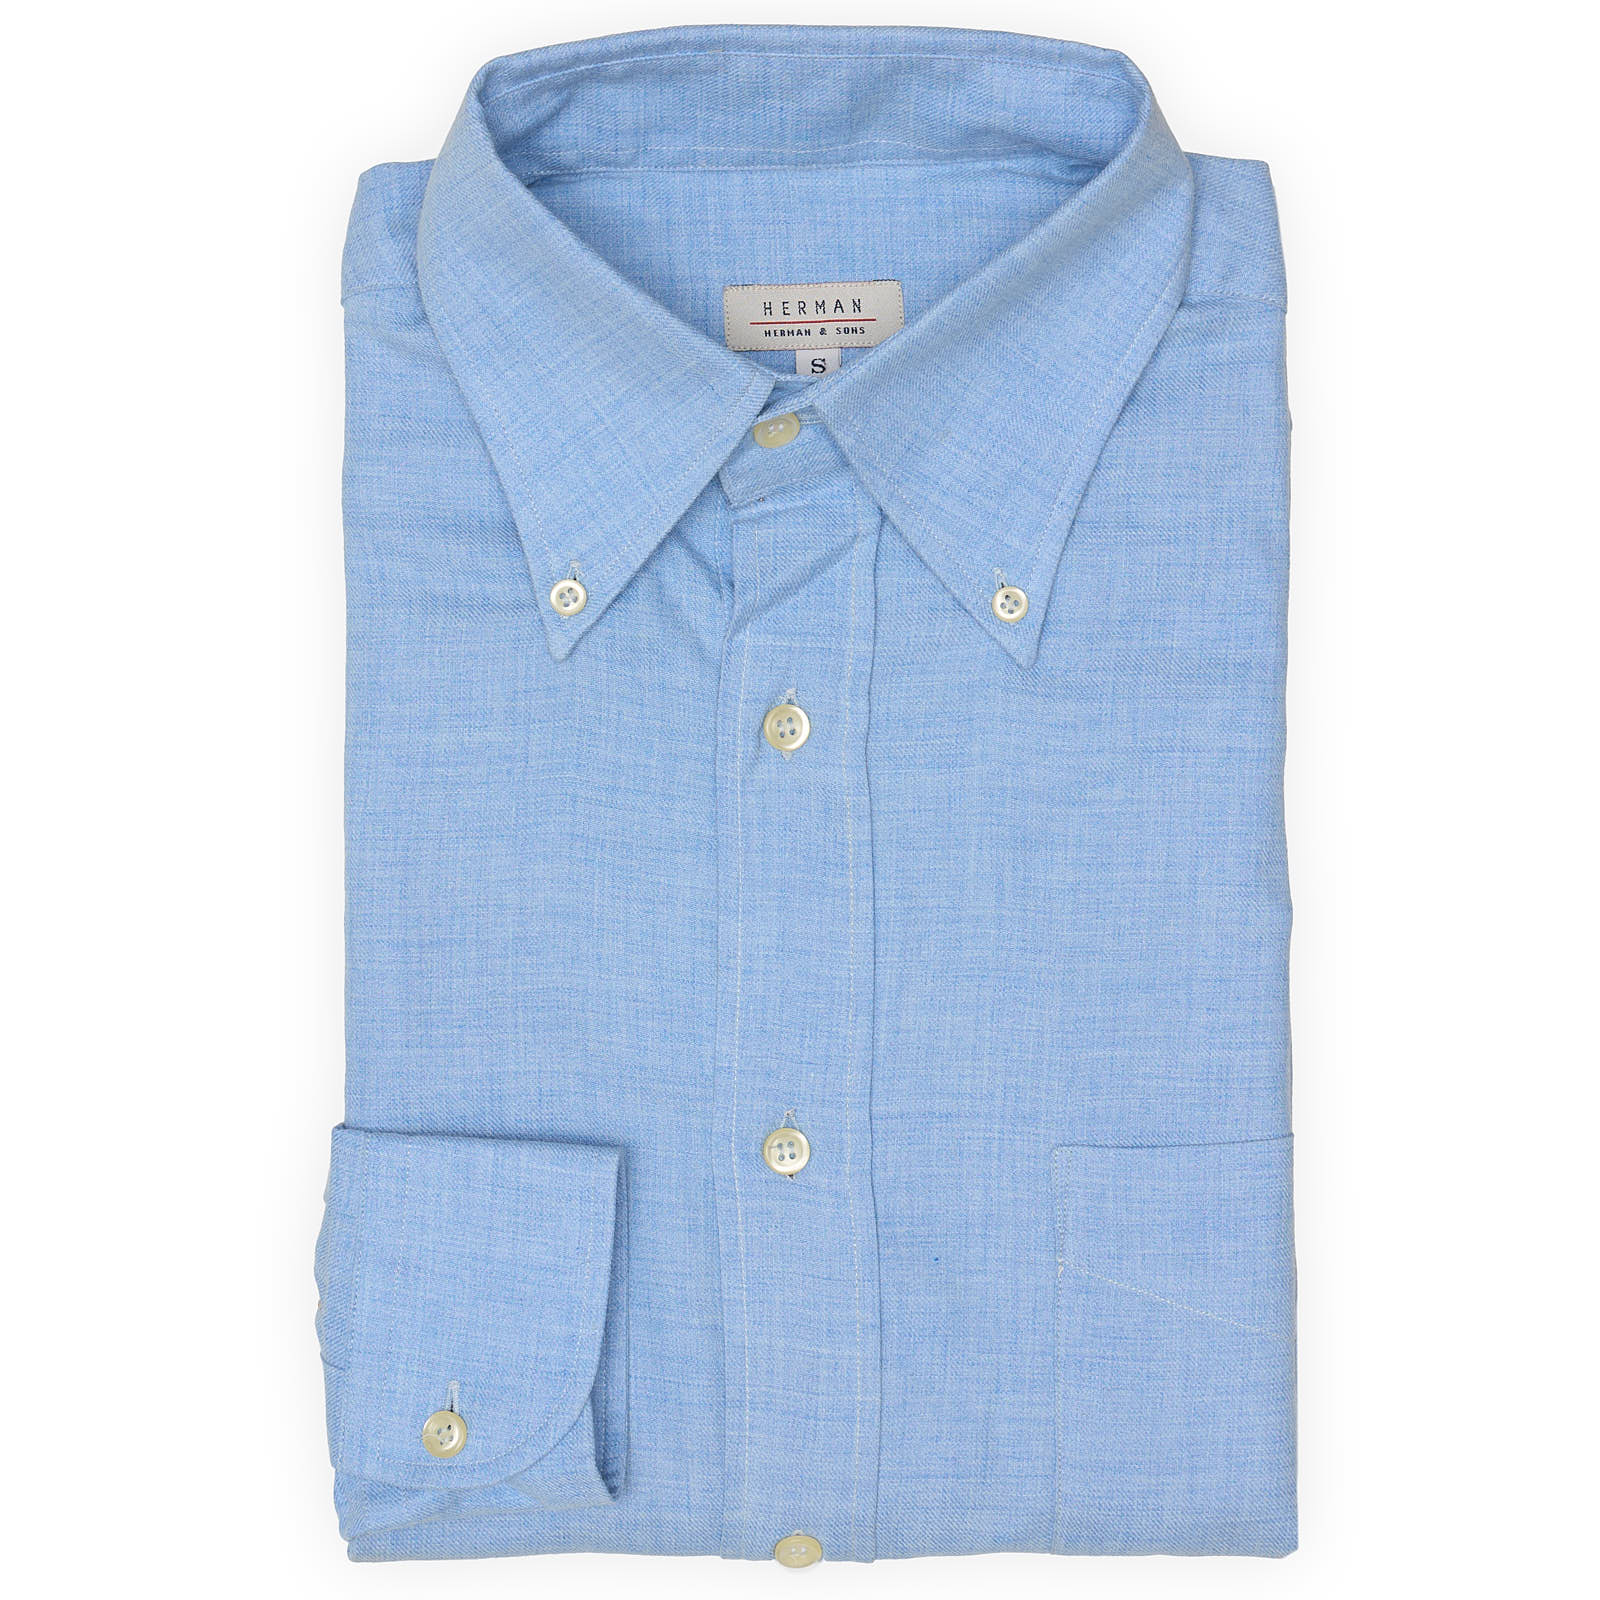 HERMAN Blue Melange Cotton Dress Shirt EU S NEW US 15.5